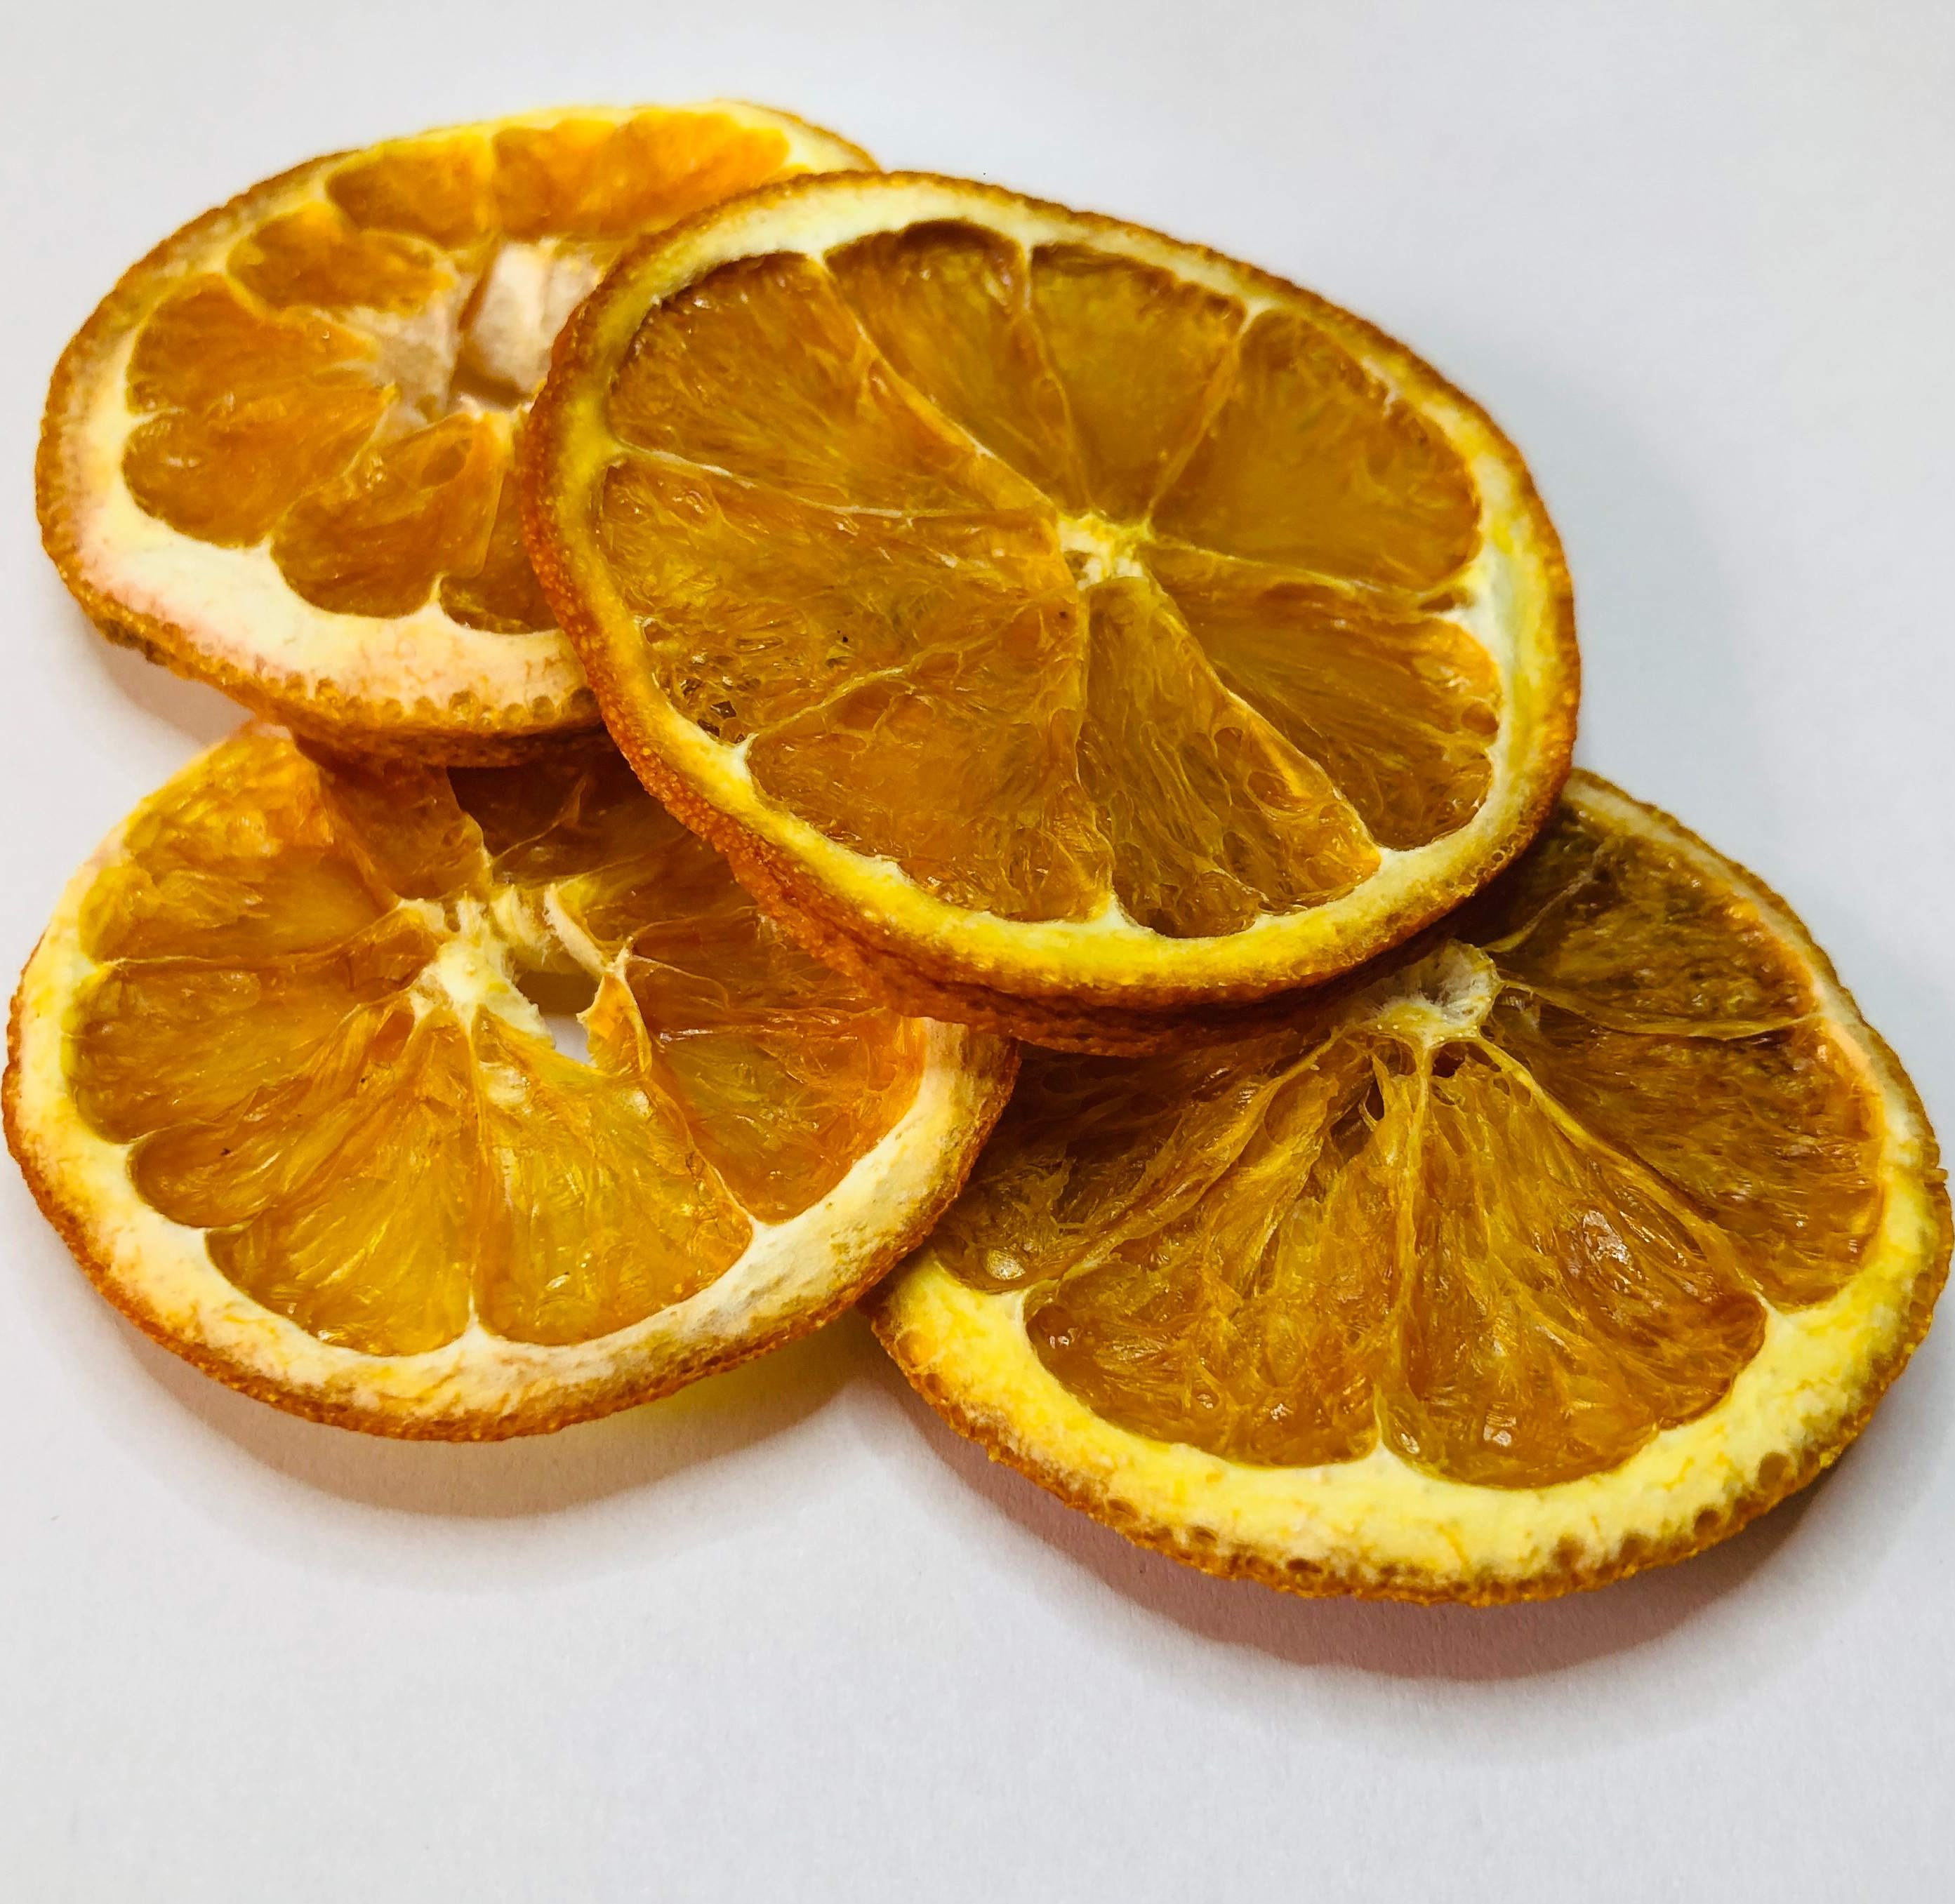 https://shp.aradbranding.com/قیمت پرتقال خشک شده تازه تهران با کیفیت ارزان + خرید عمده